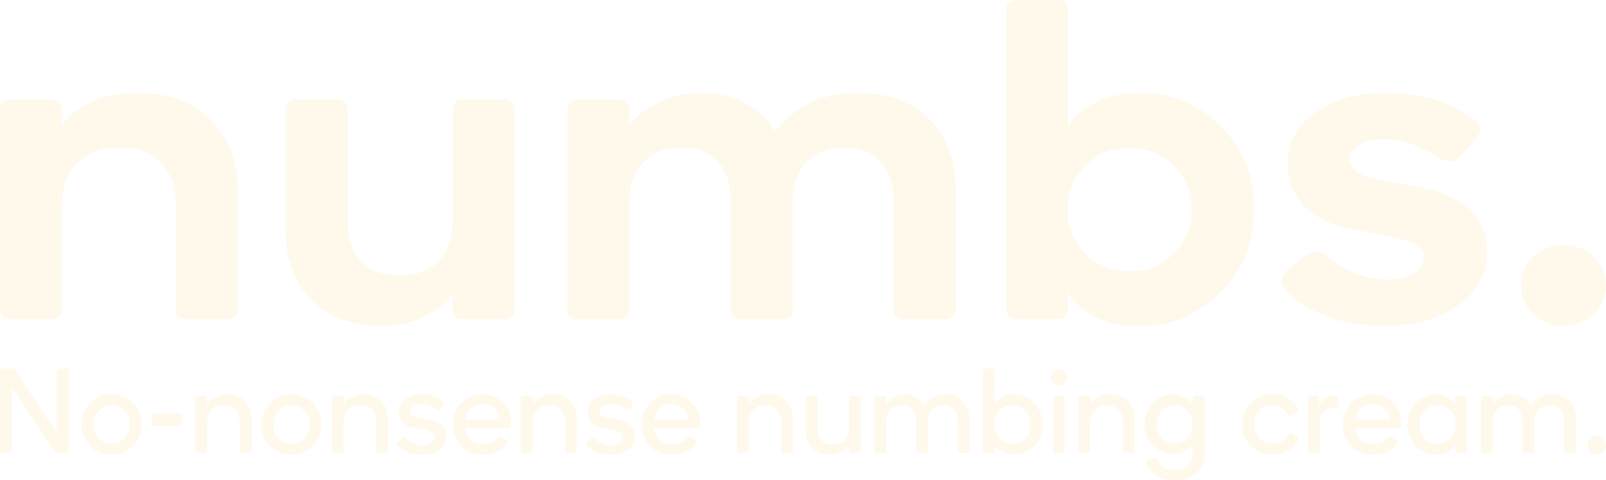 Numbs logo cream 